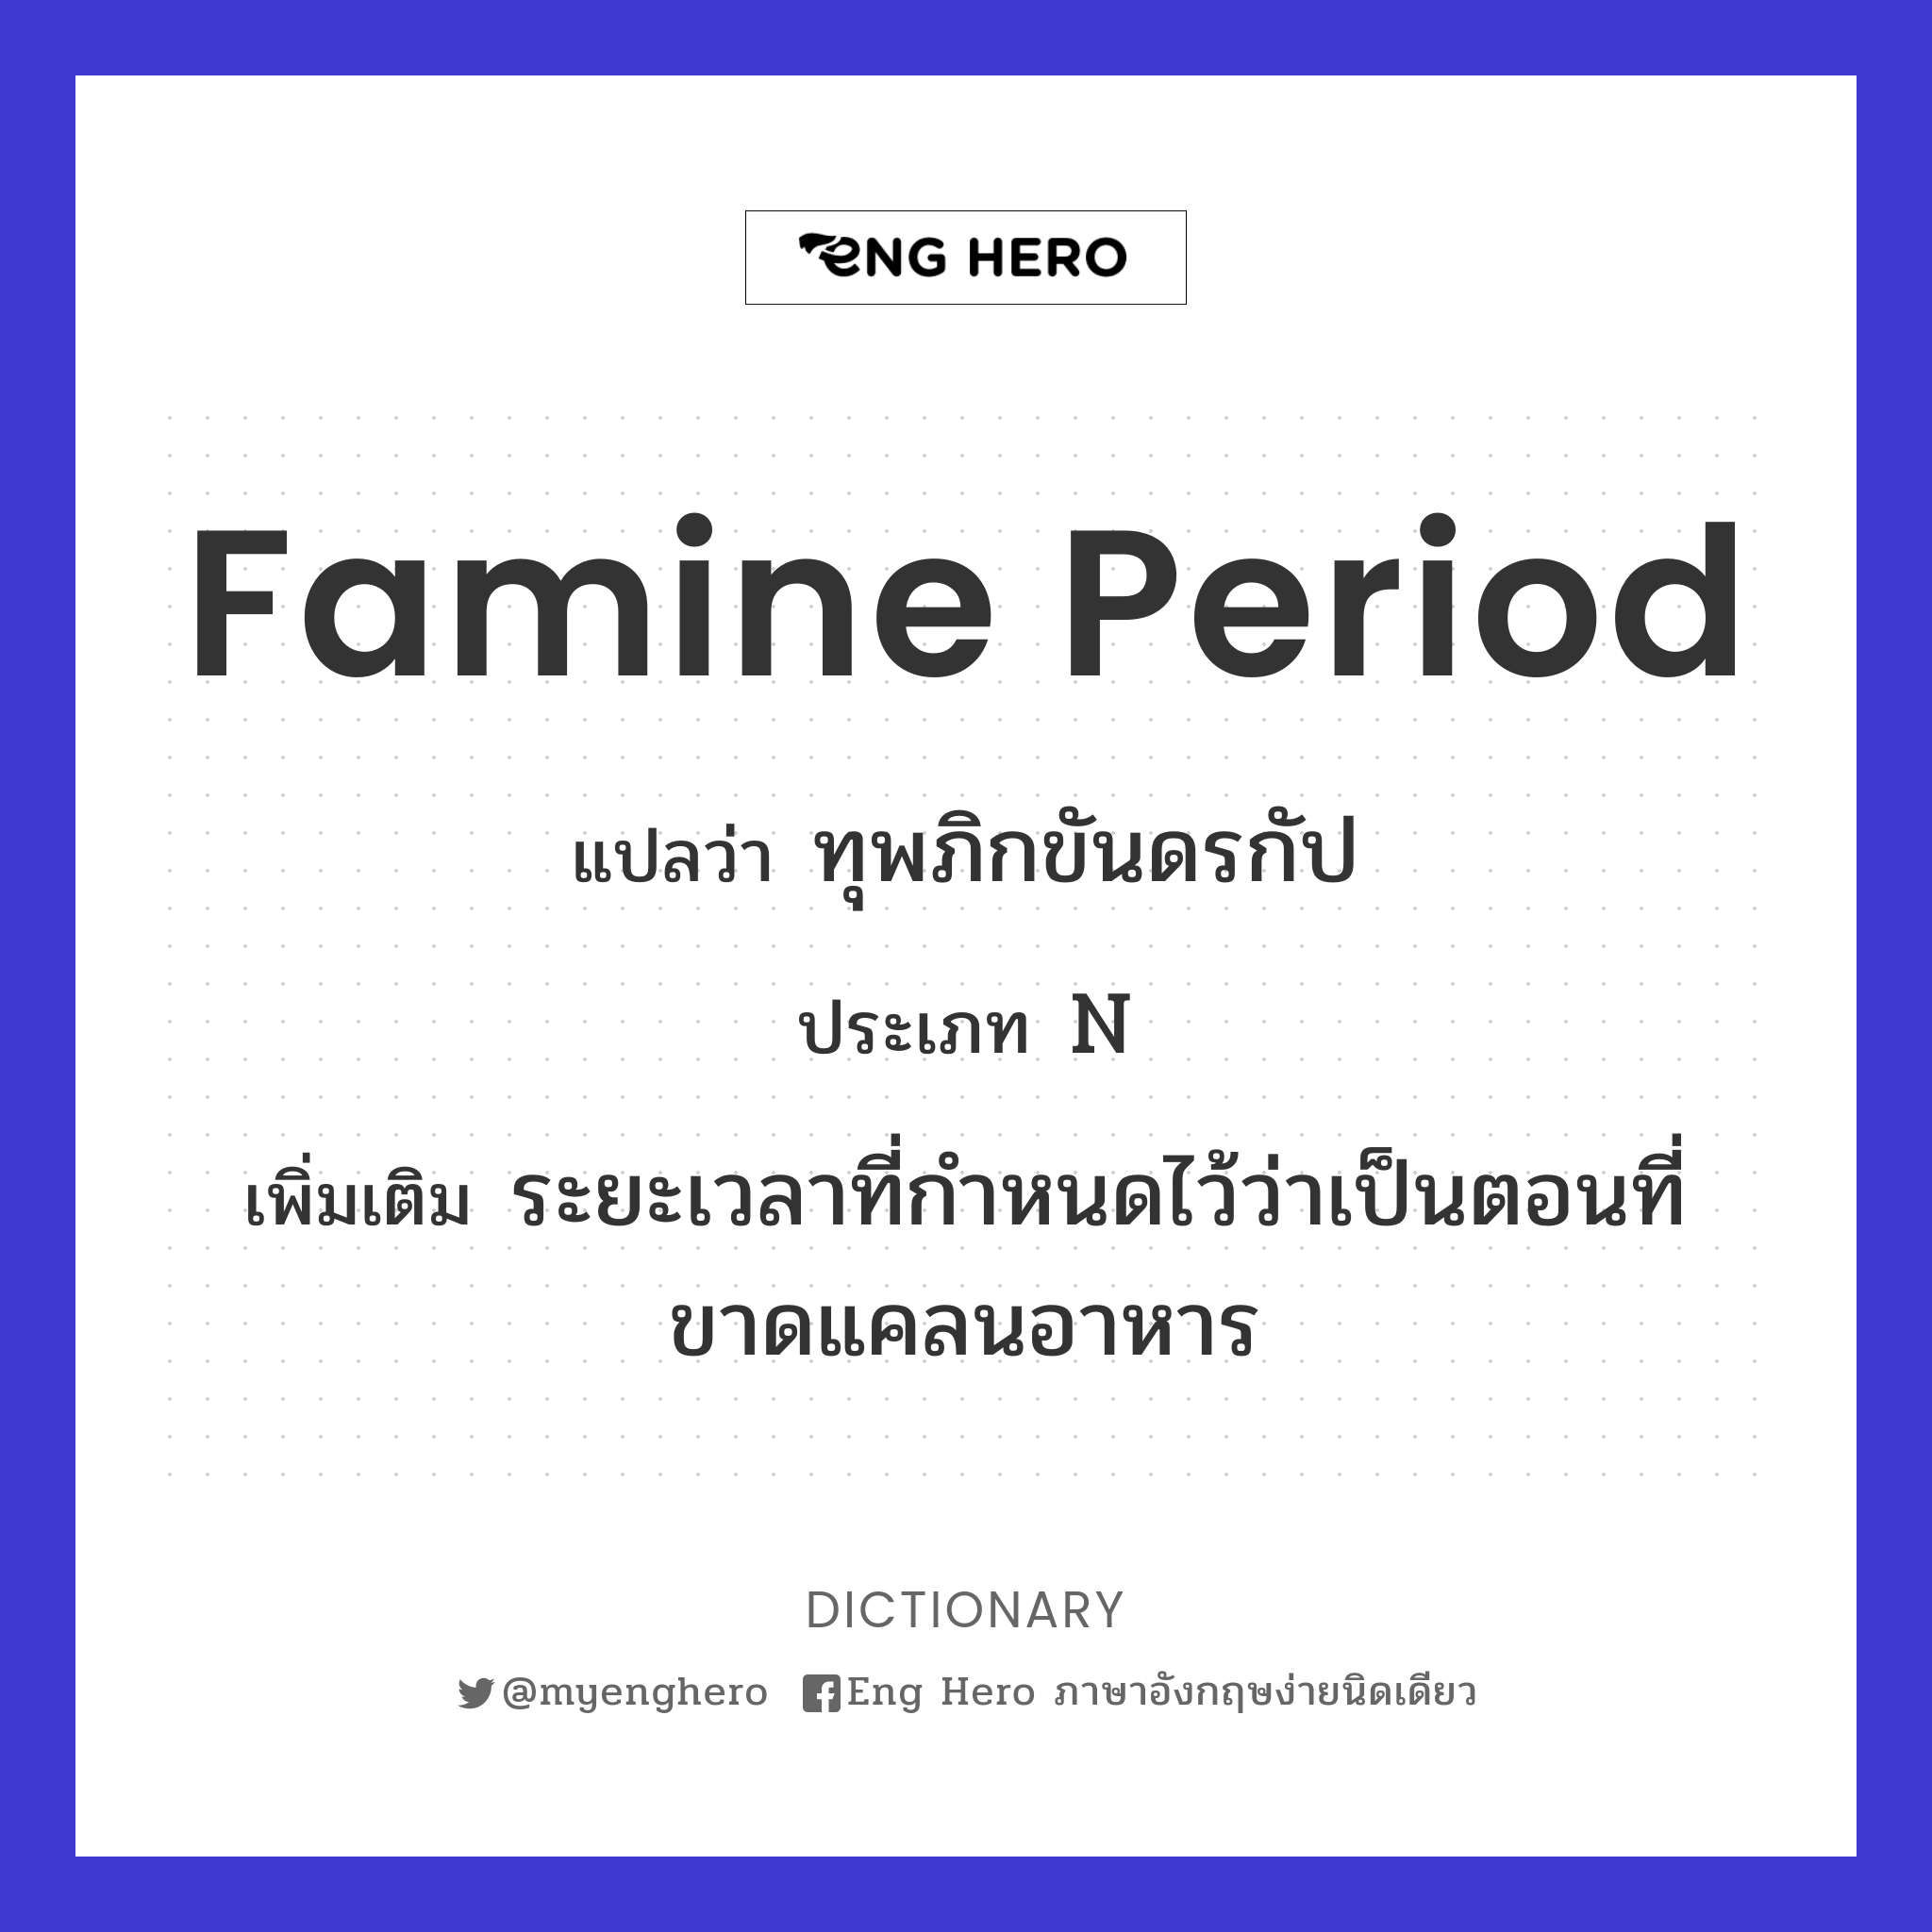 famine period